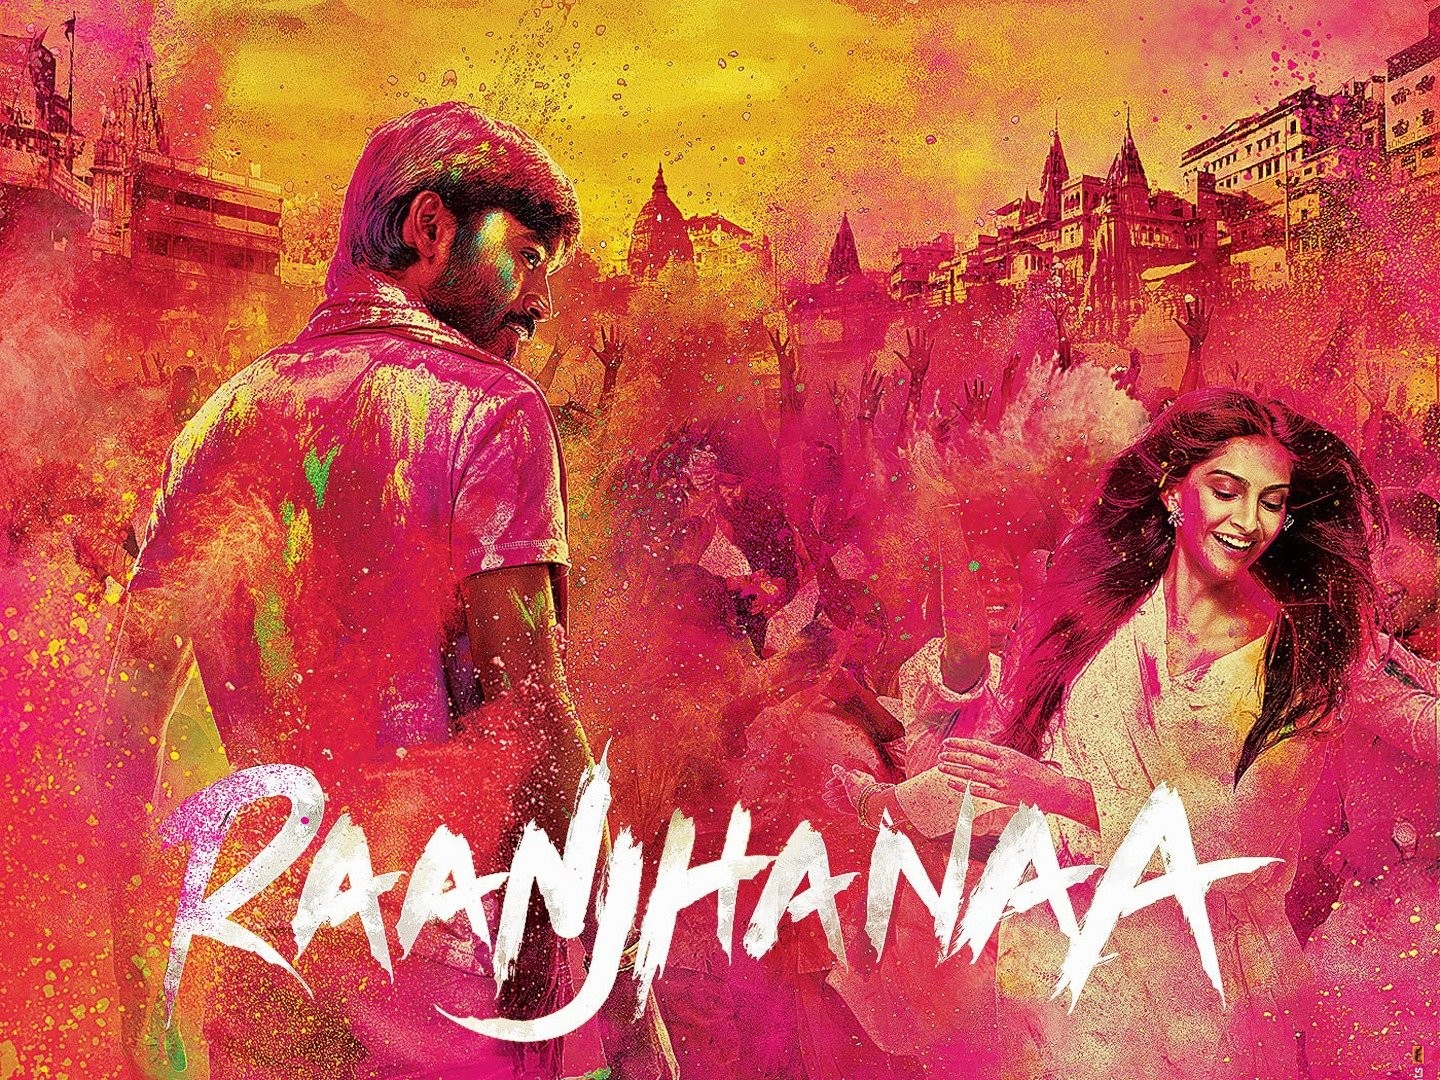 Tere Ishk Mein: Dhanush reunites with team Raanjhanaa- Aanand L Rai, AR  Rahman- for next Hindi film